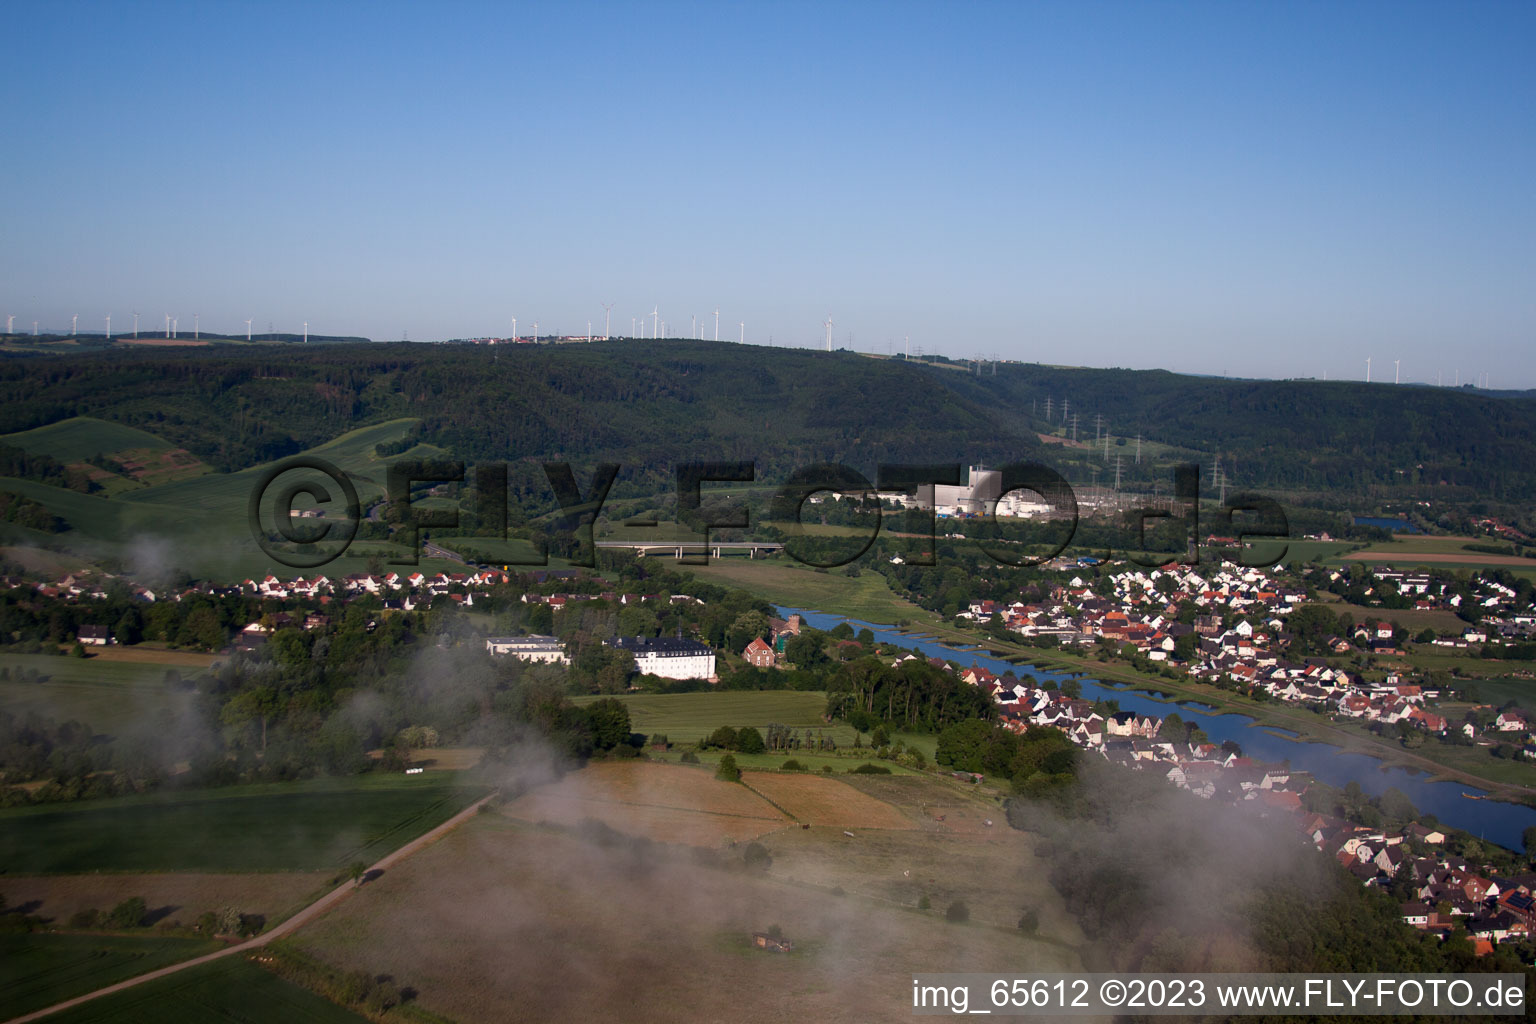 Bird's eye view of Herstelle in the state North Rhine-Westphalia, Germany